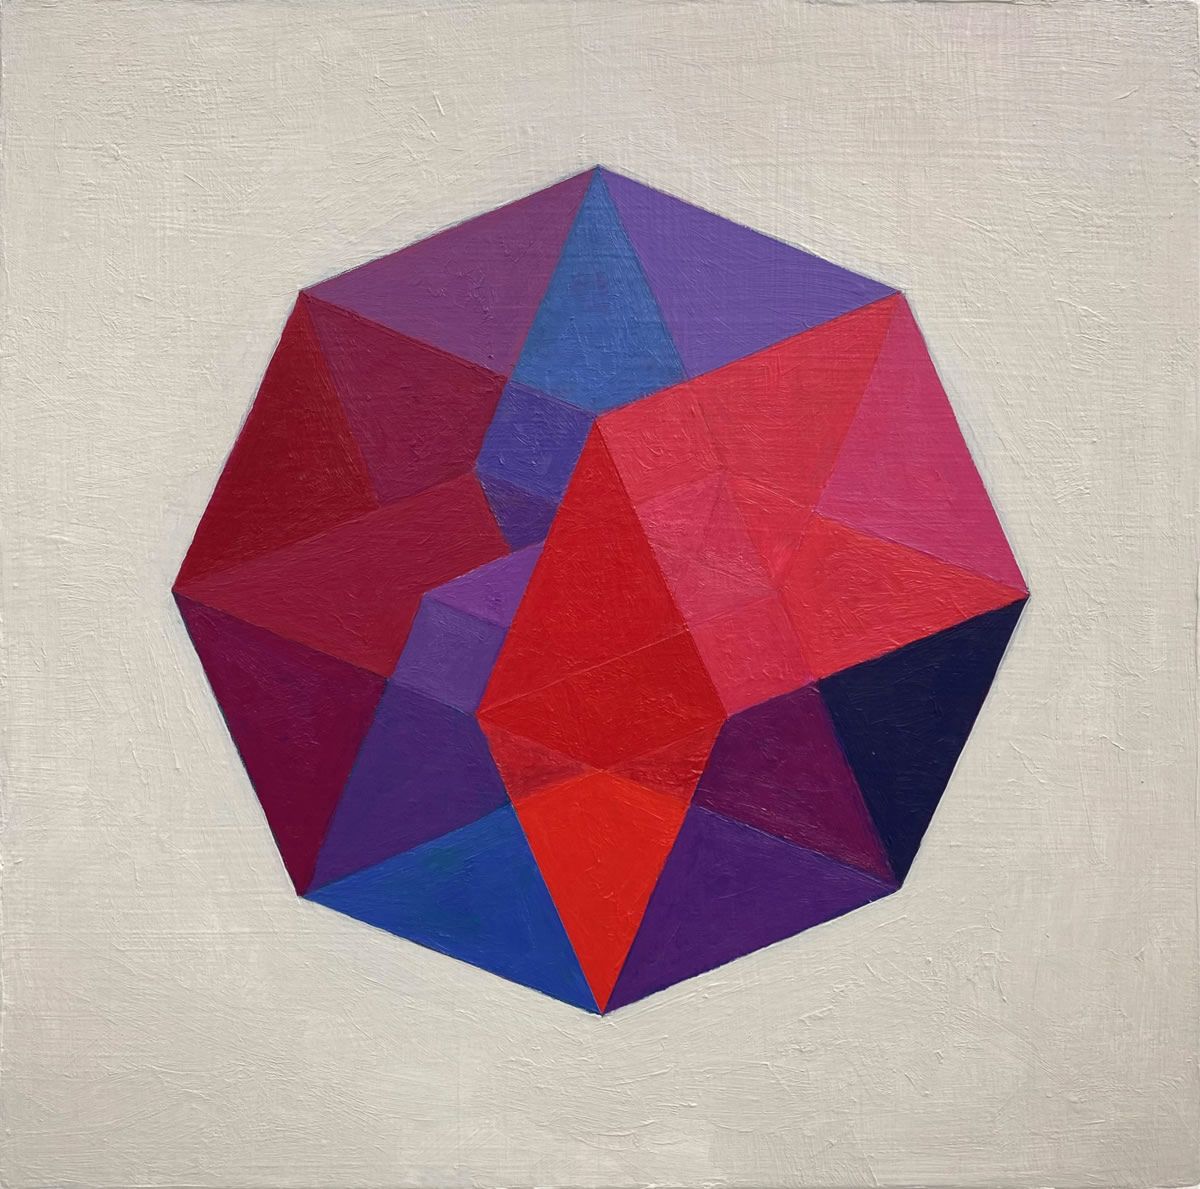 A three dimensional hexagonal shape with a star-like appearance.